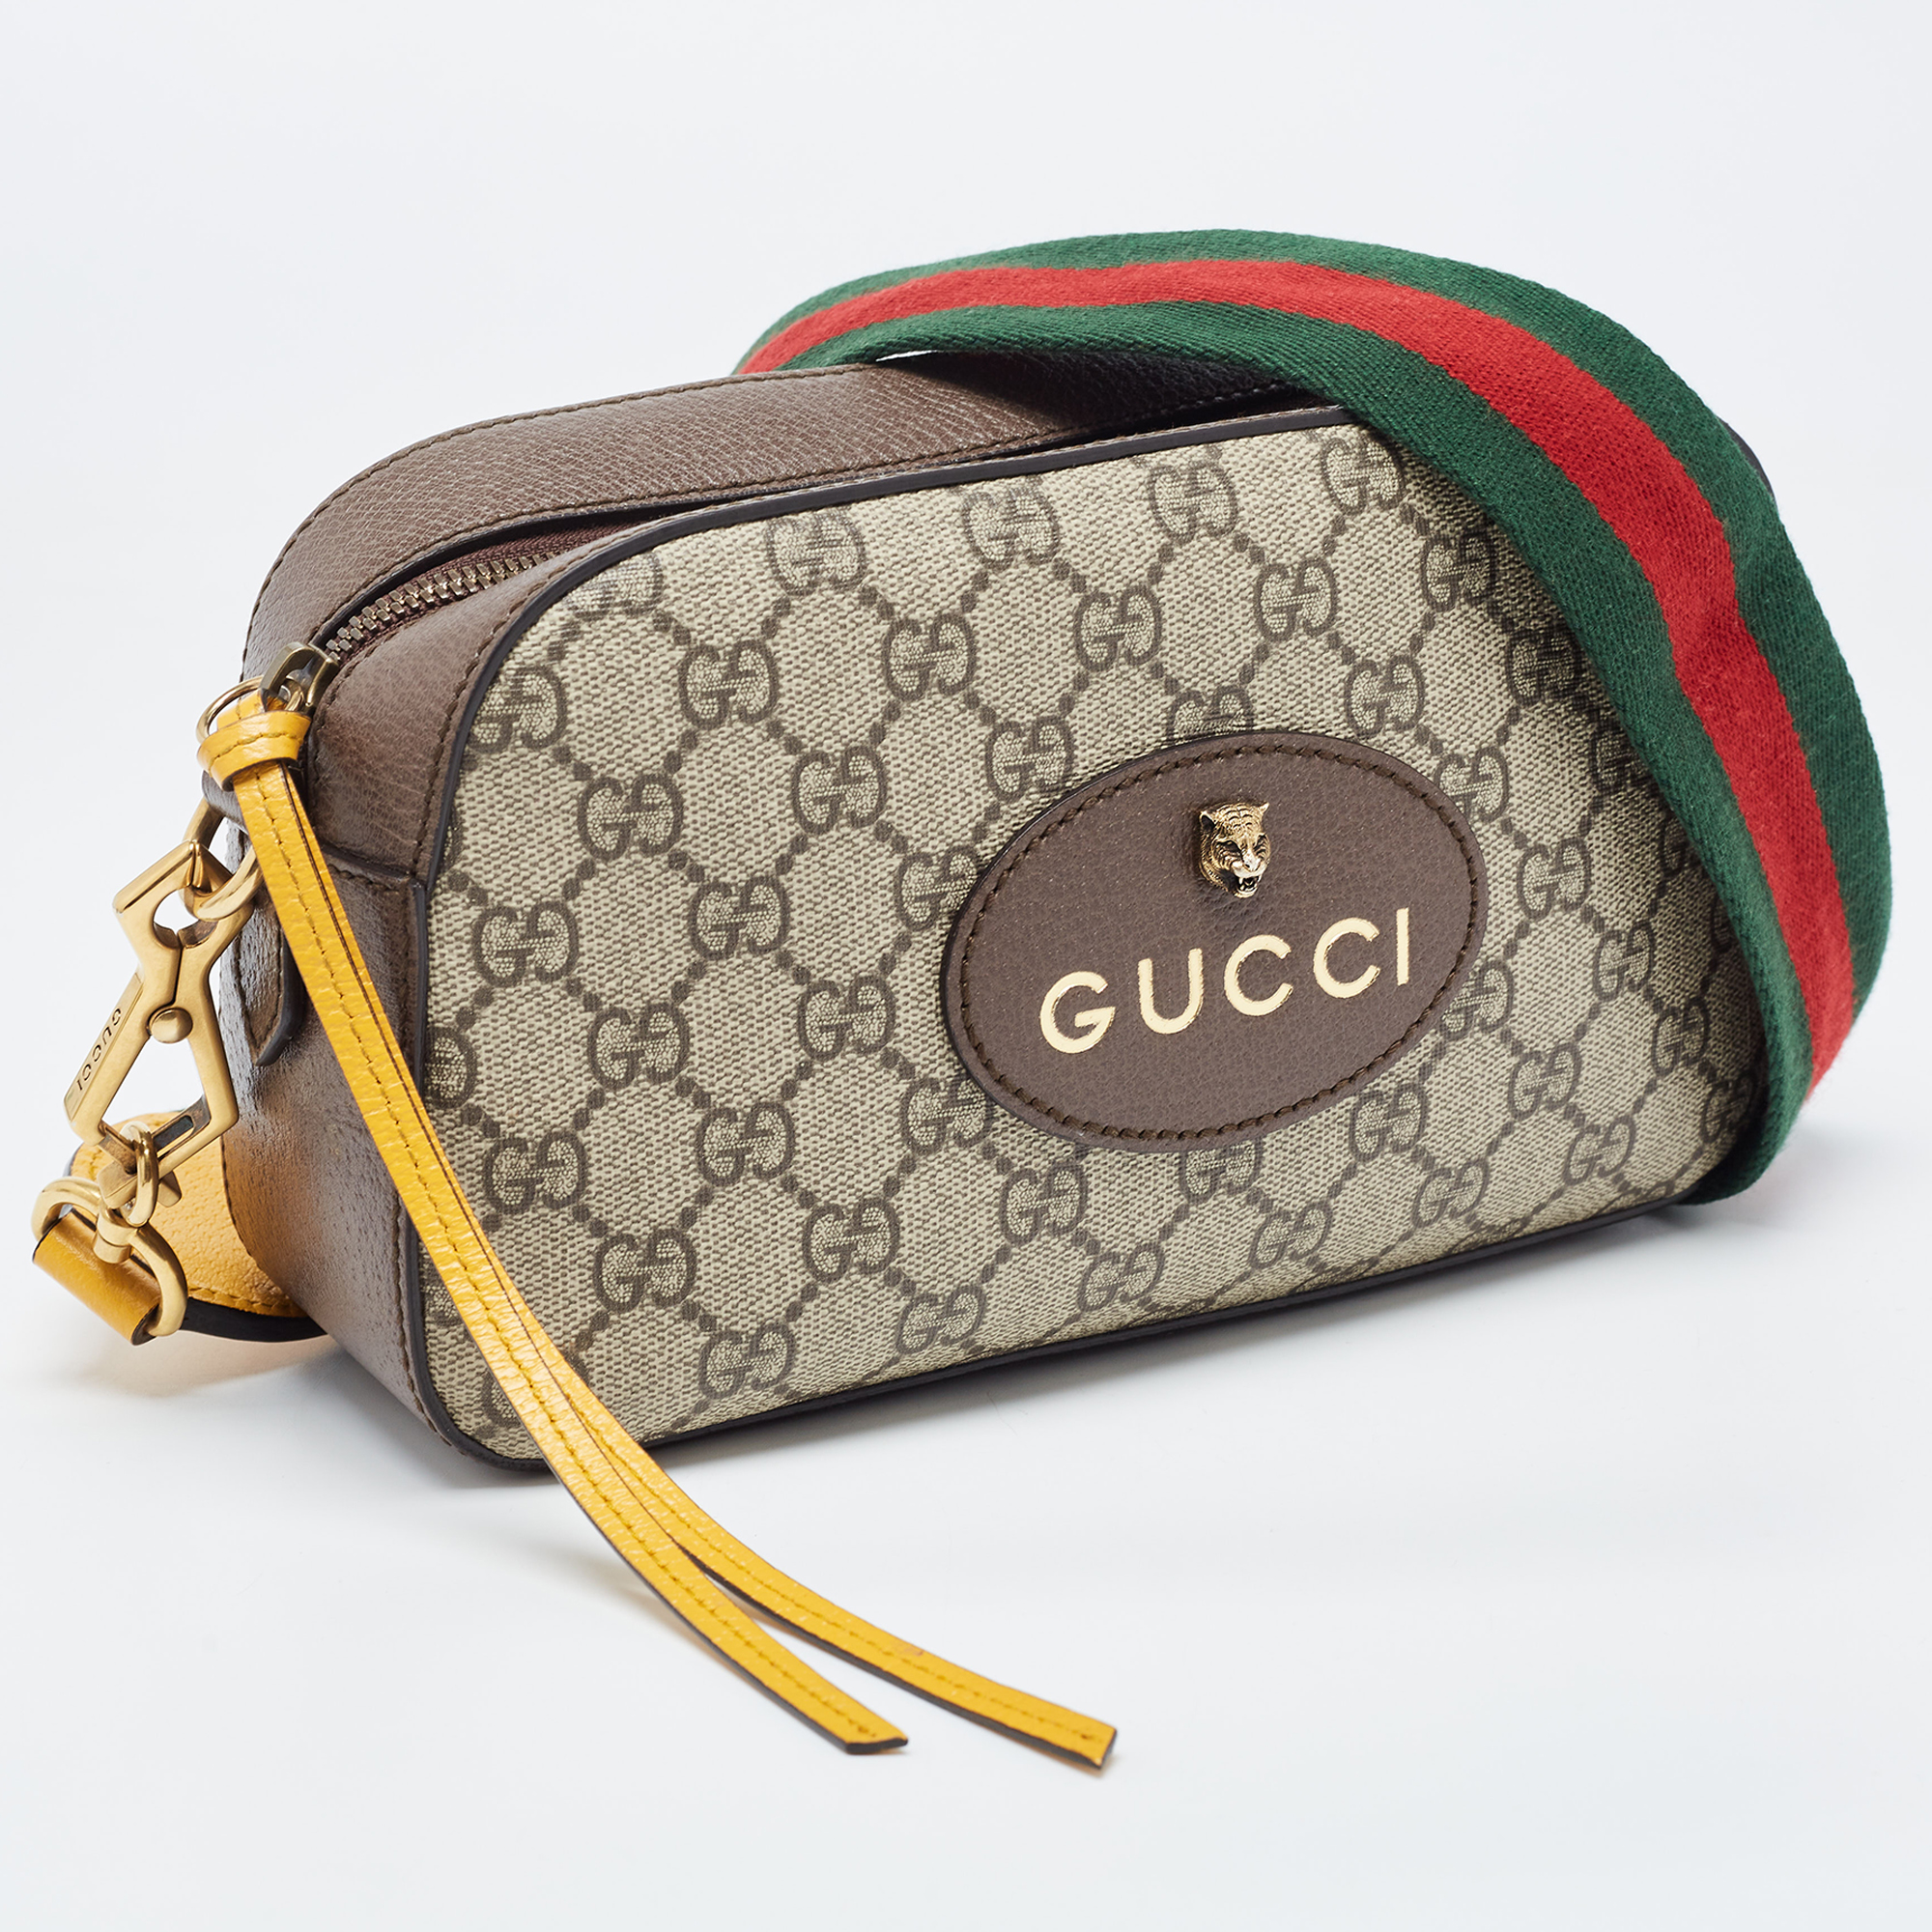 Gucci Brown/Beige GG Supreme Canvas Neo Vintage Messenger Bag